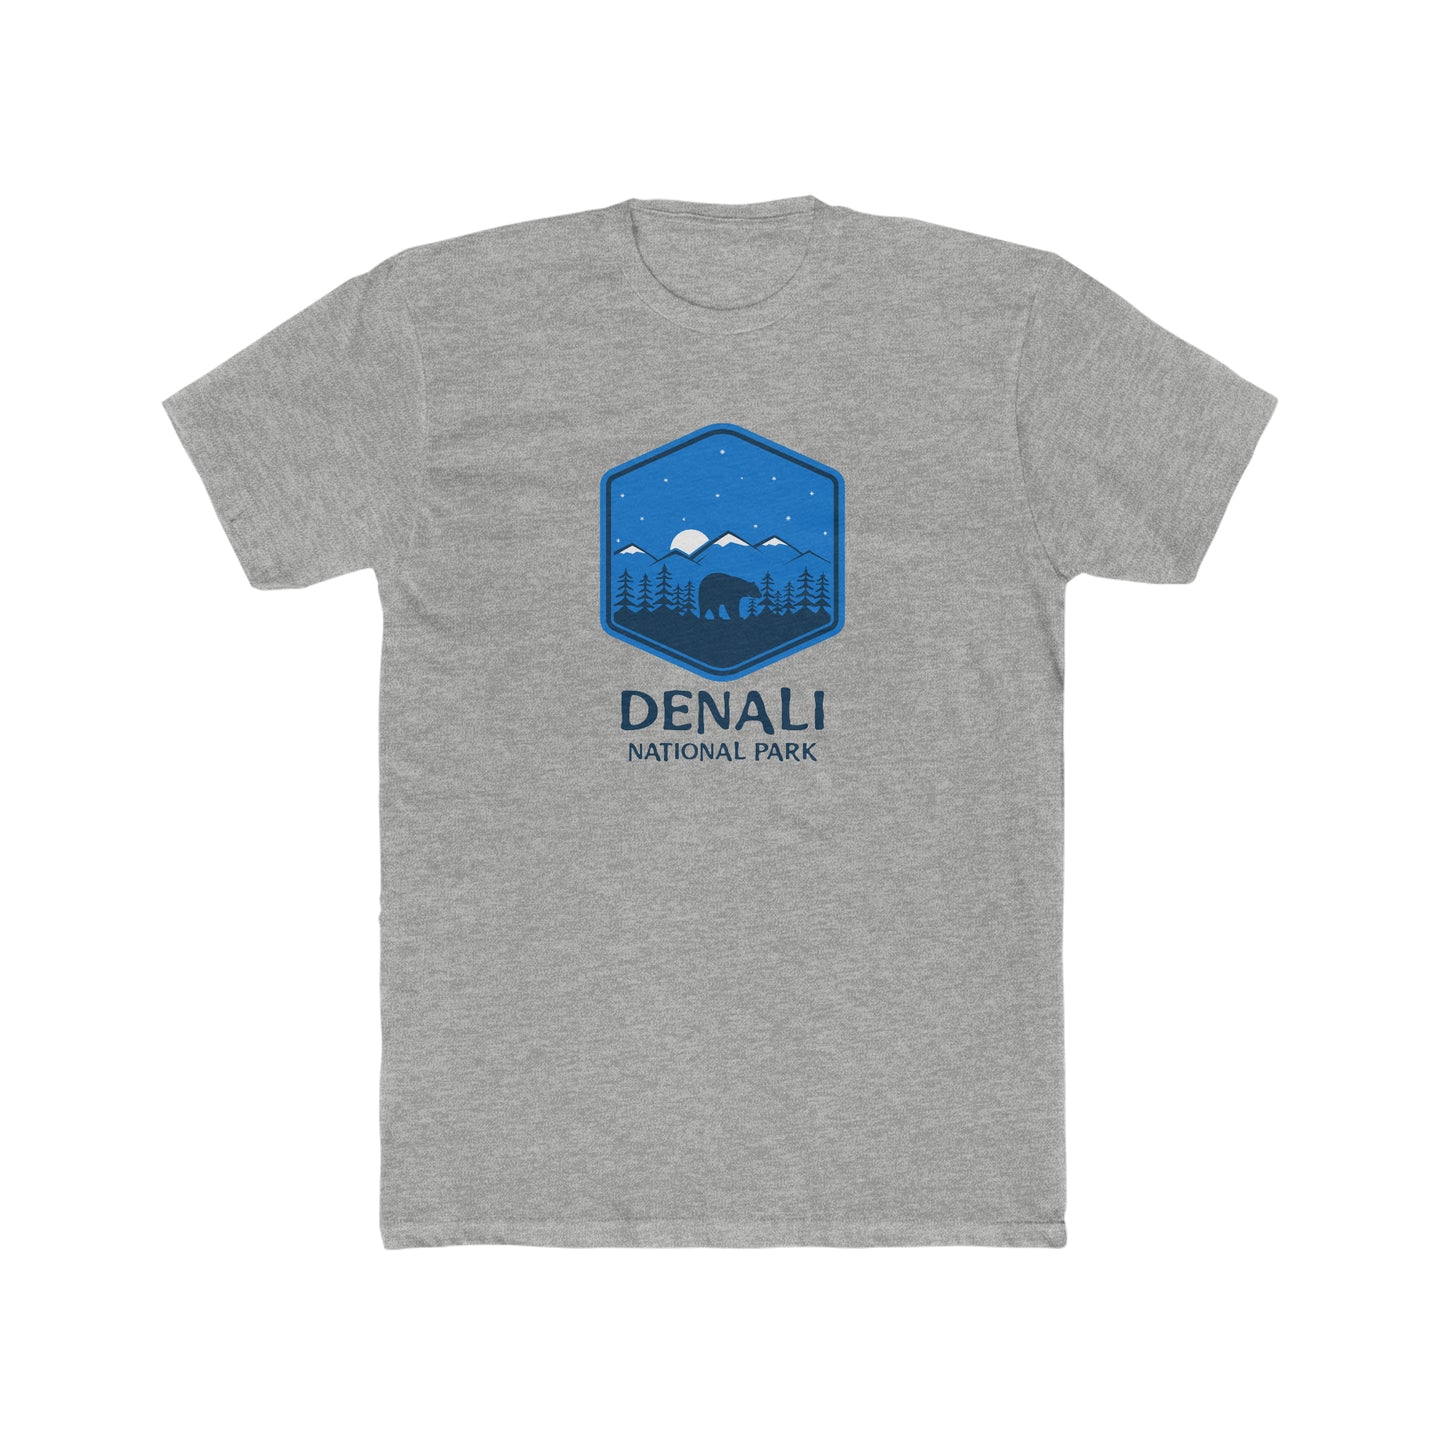 Denali National Park T-Shirt - Bear Graphic